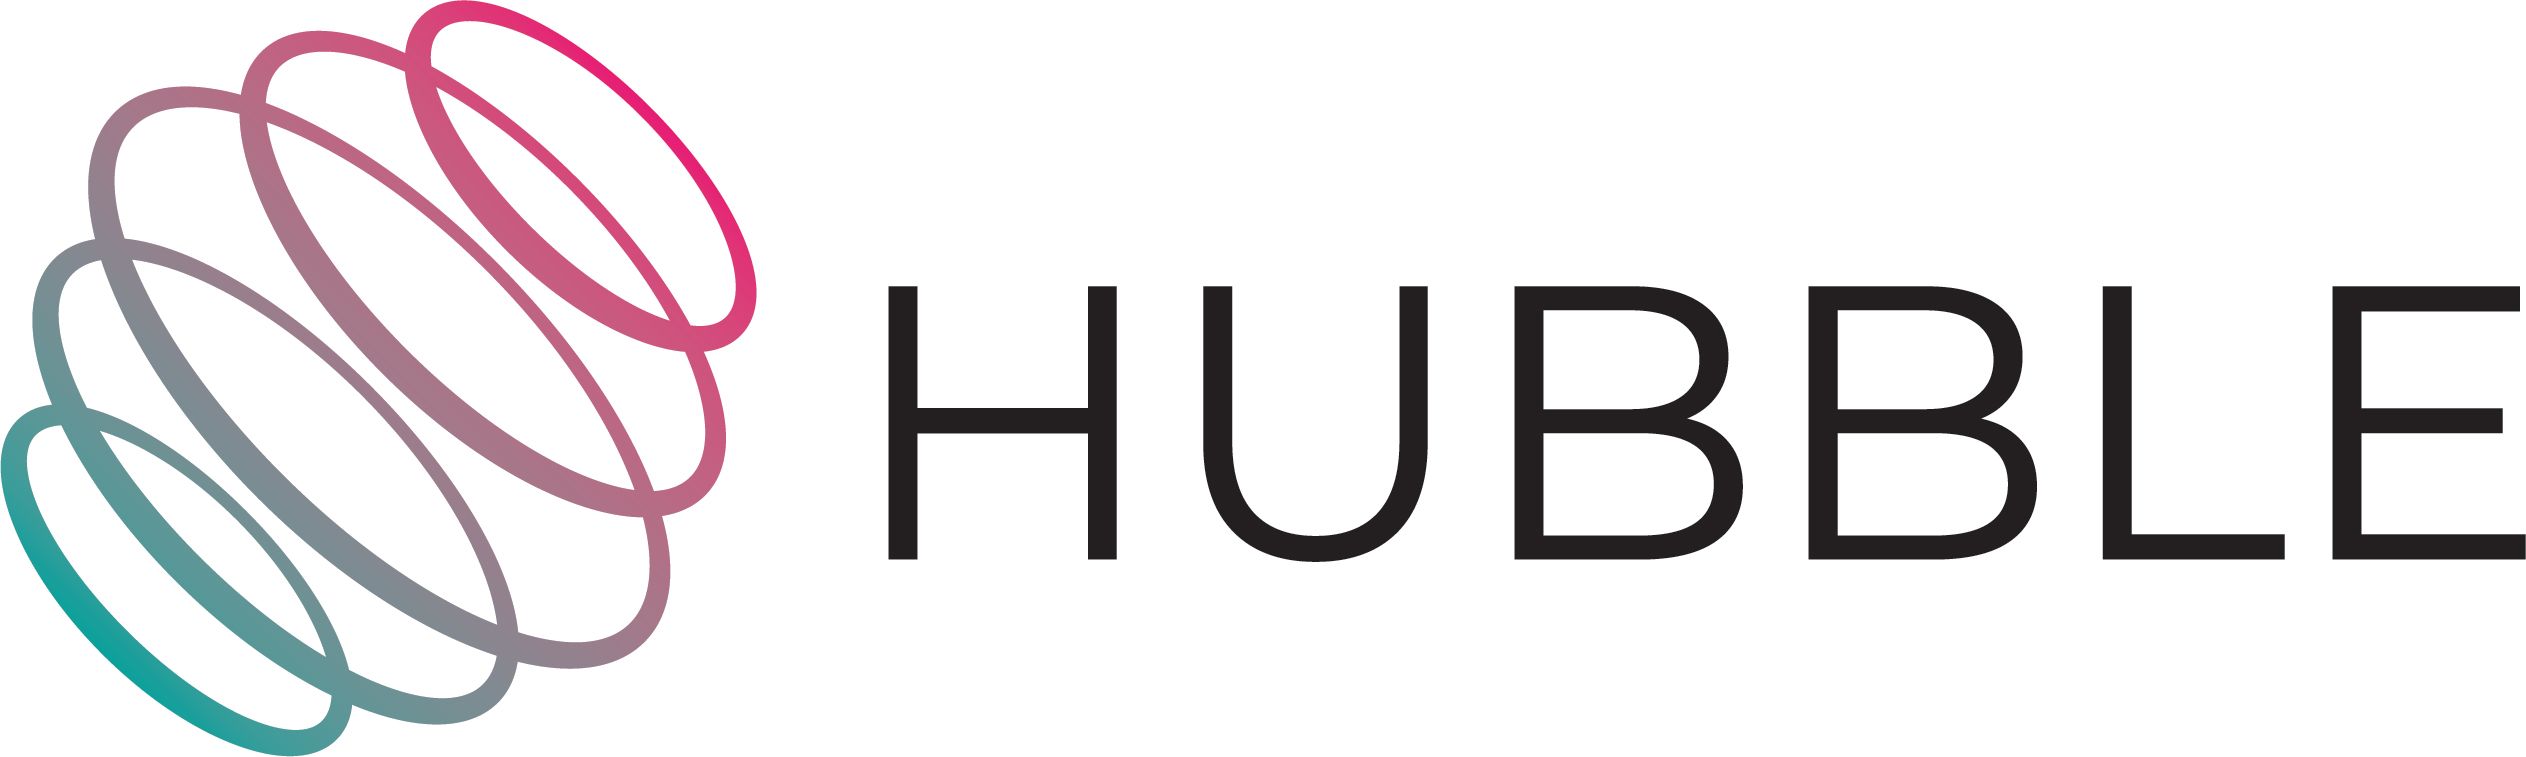 Hubble Technology